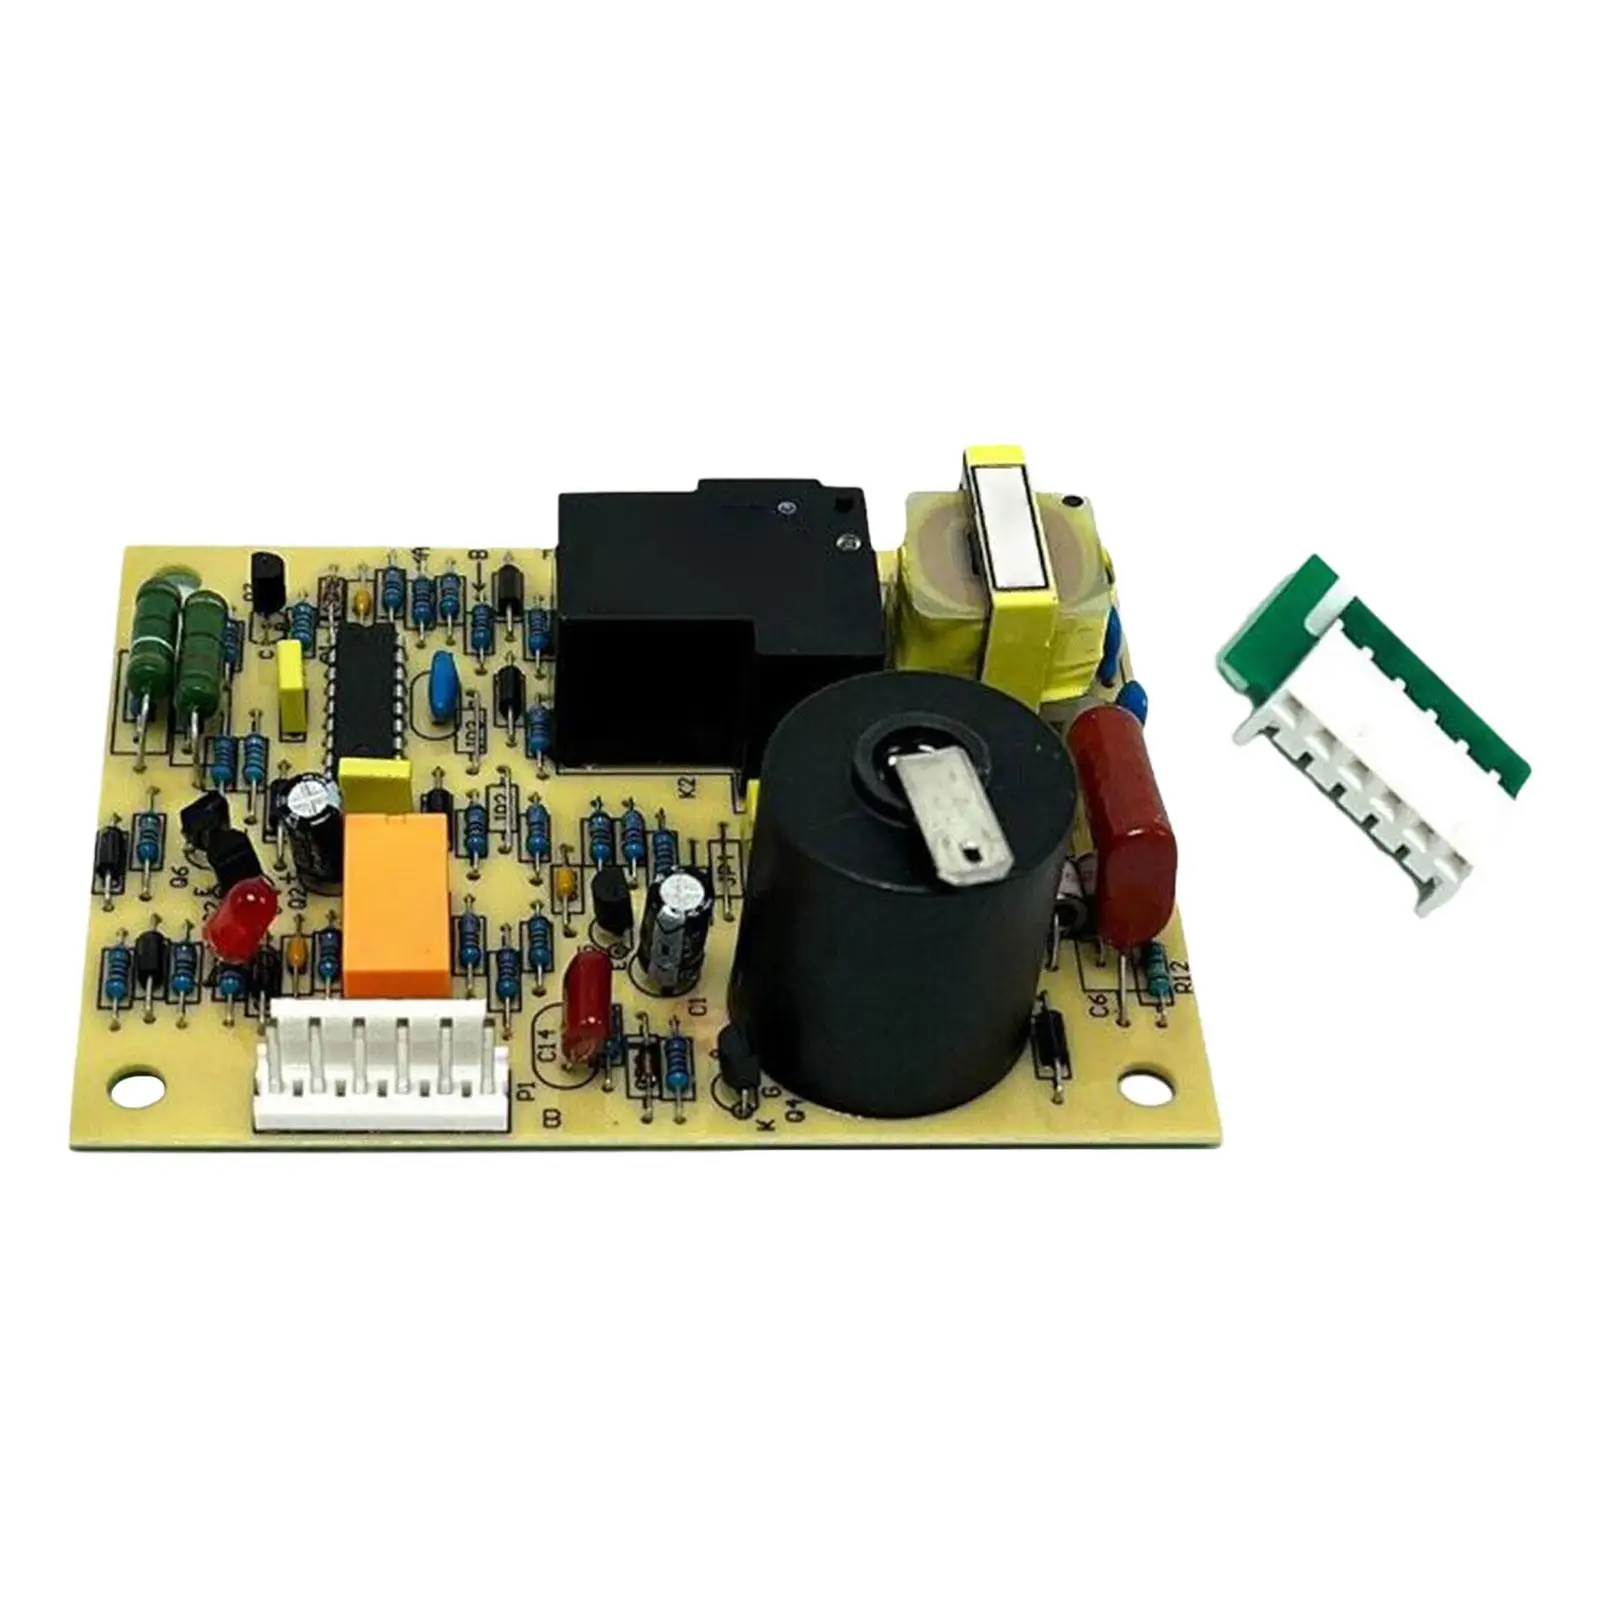 31501 Ignition Control Circuit Board for 7912-ii 8900-iii DC Series